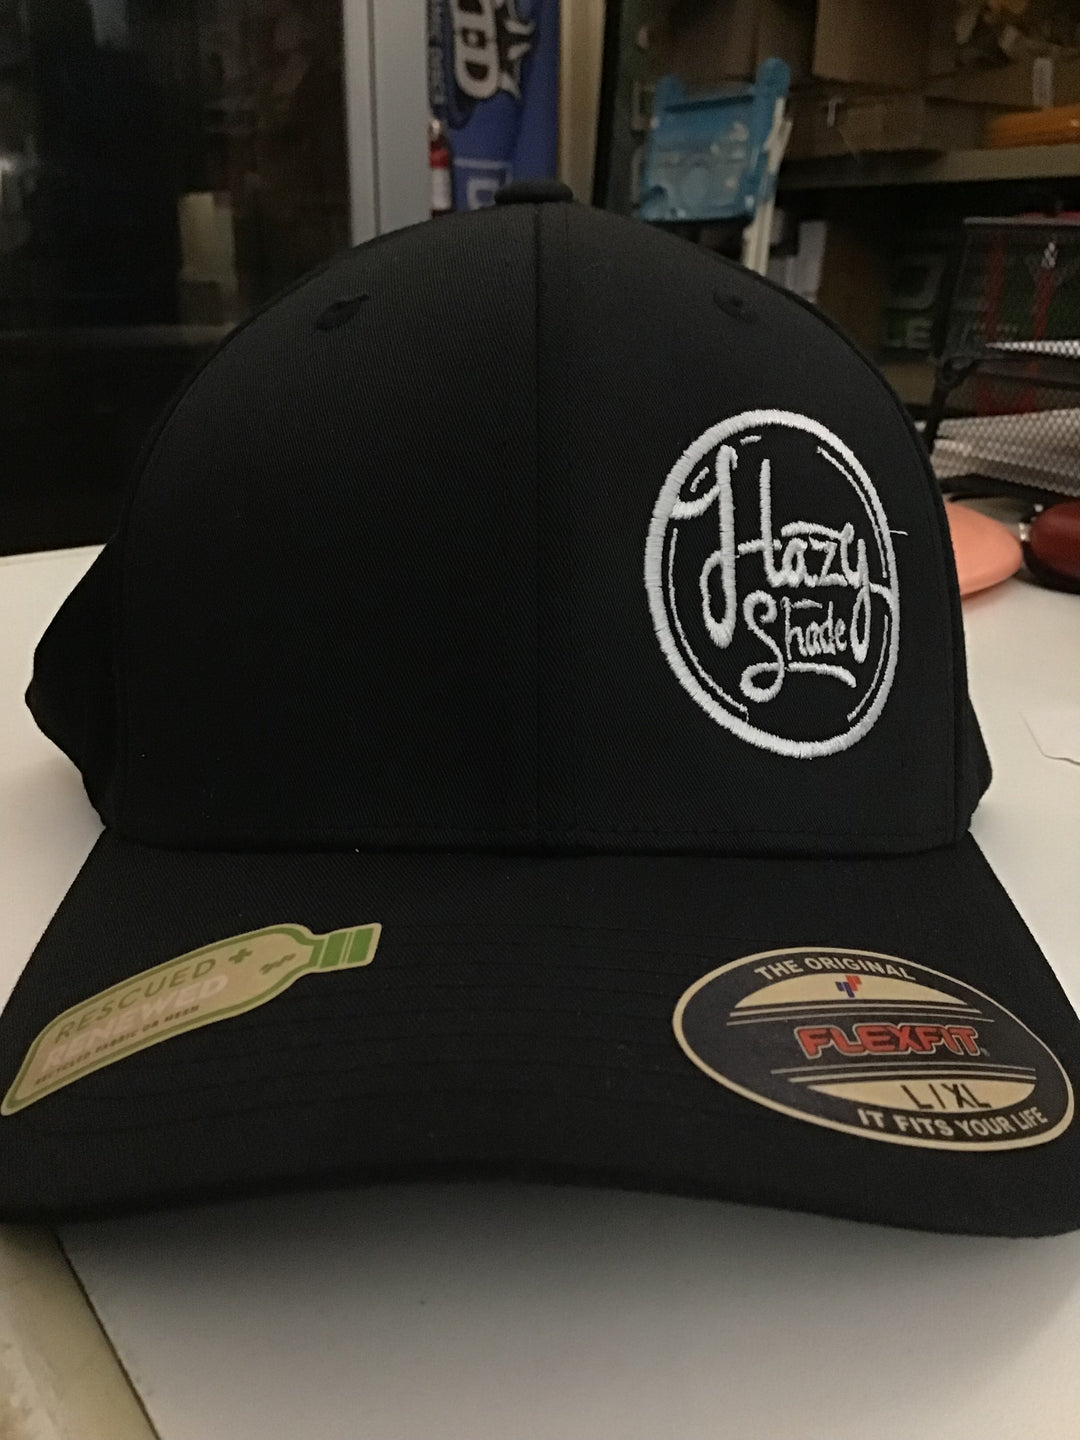 Hazy Shade Flexfit Sustainable Retro Trucker Cap Round Offset Logo